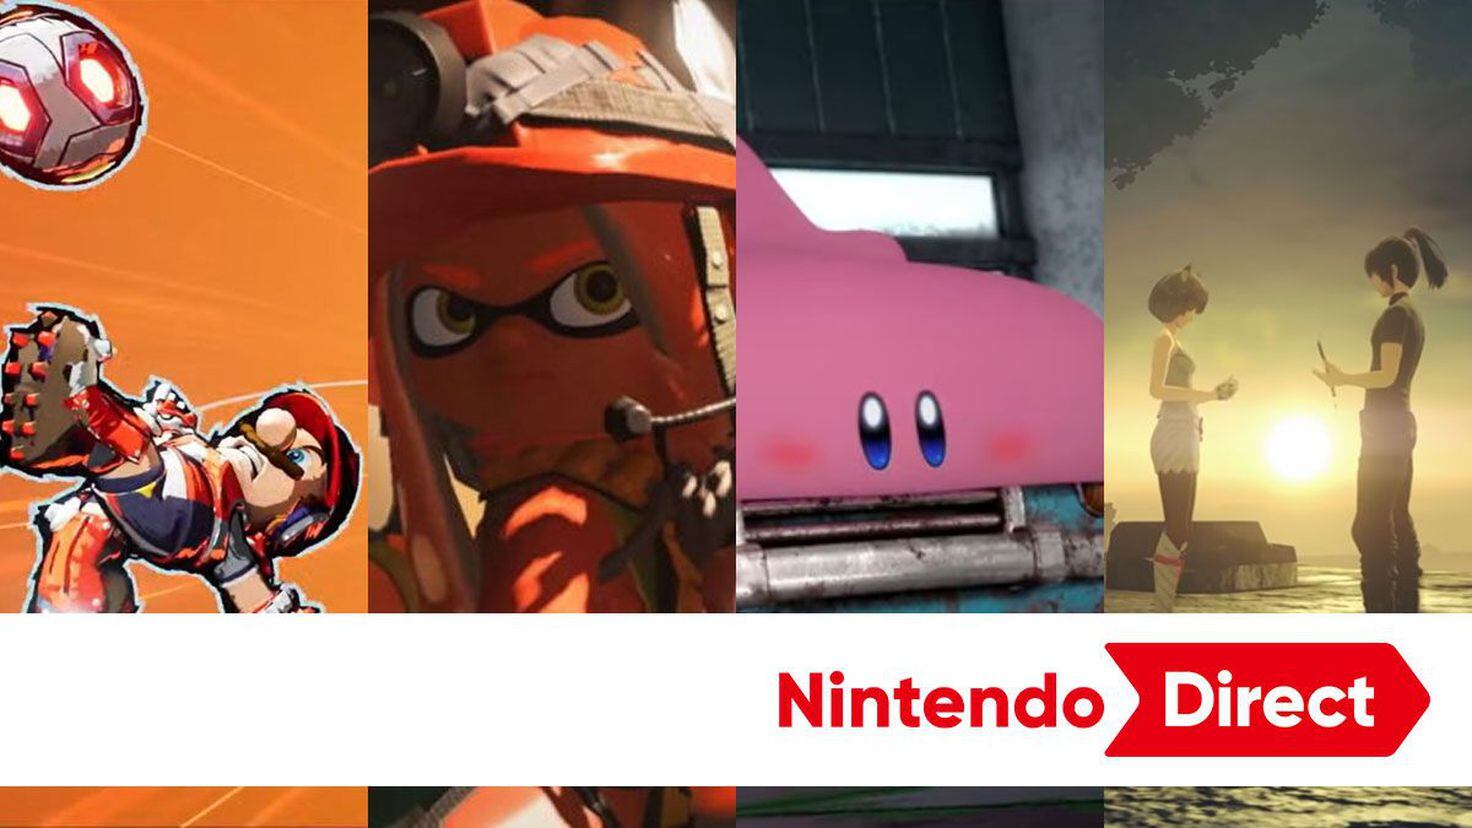 Surprise Nintendo Direct announced for 14 September